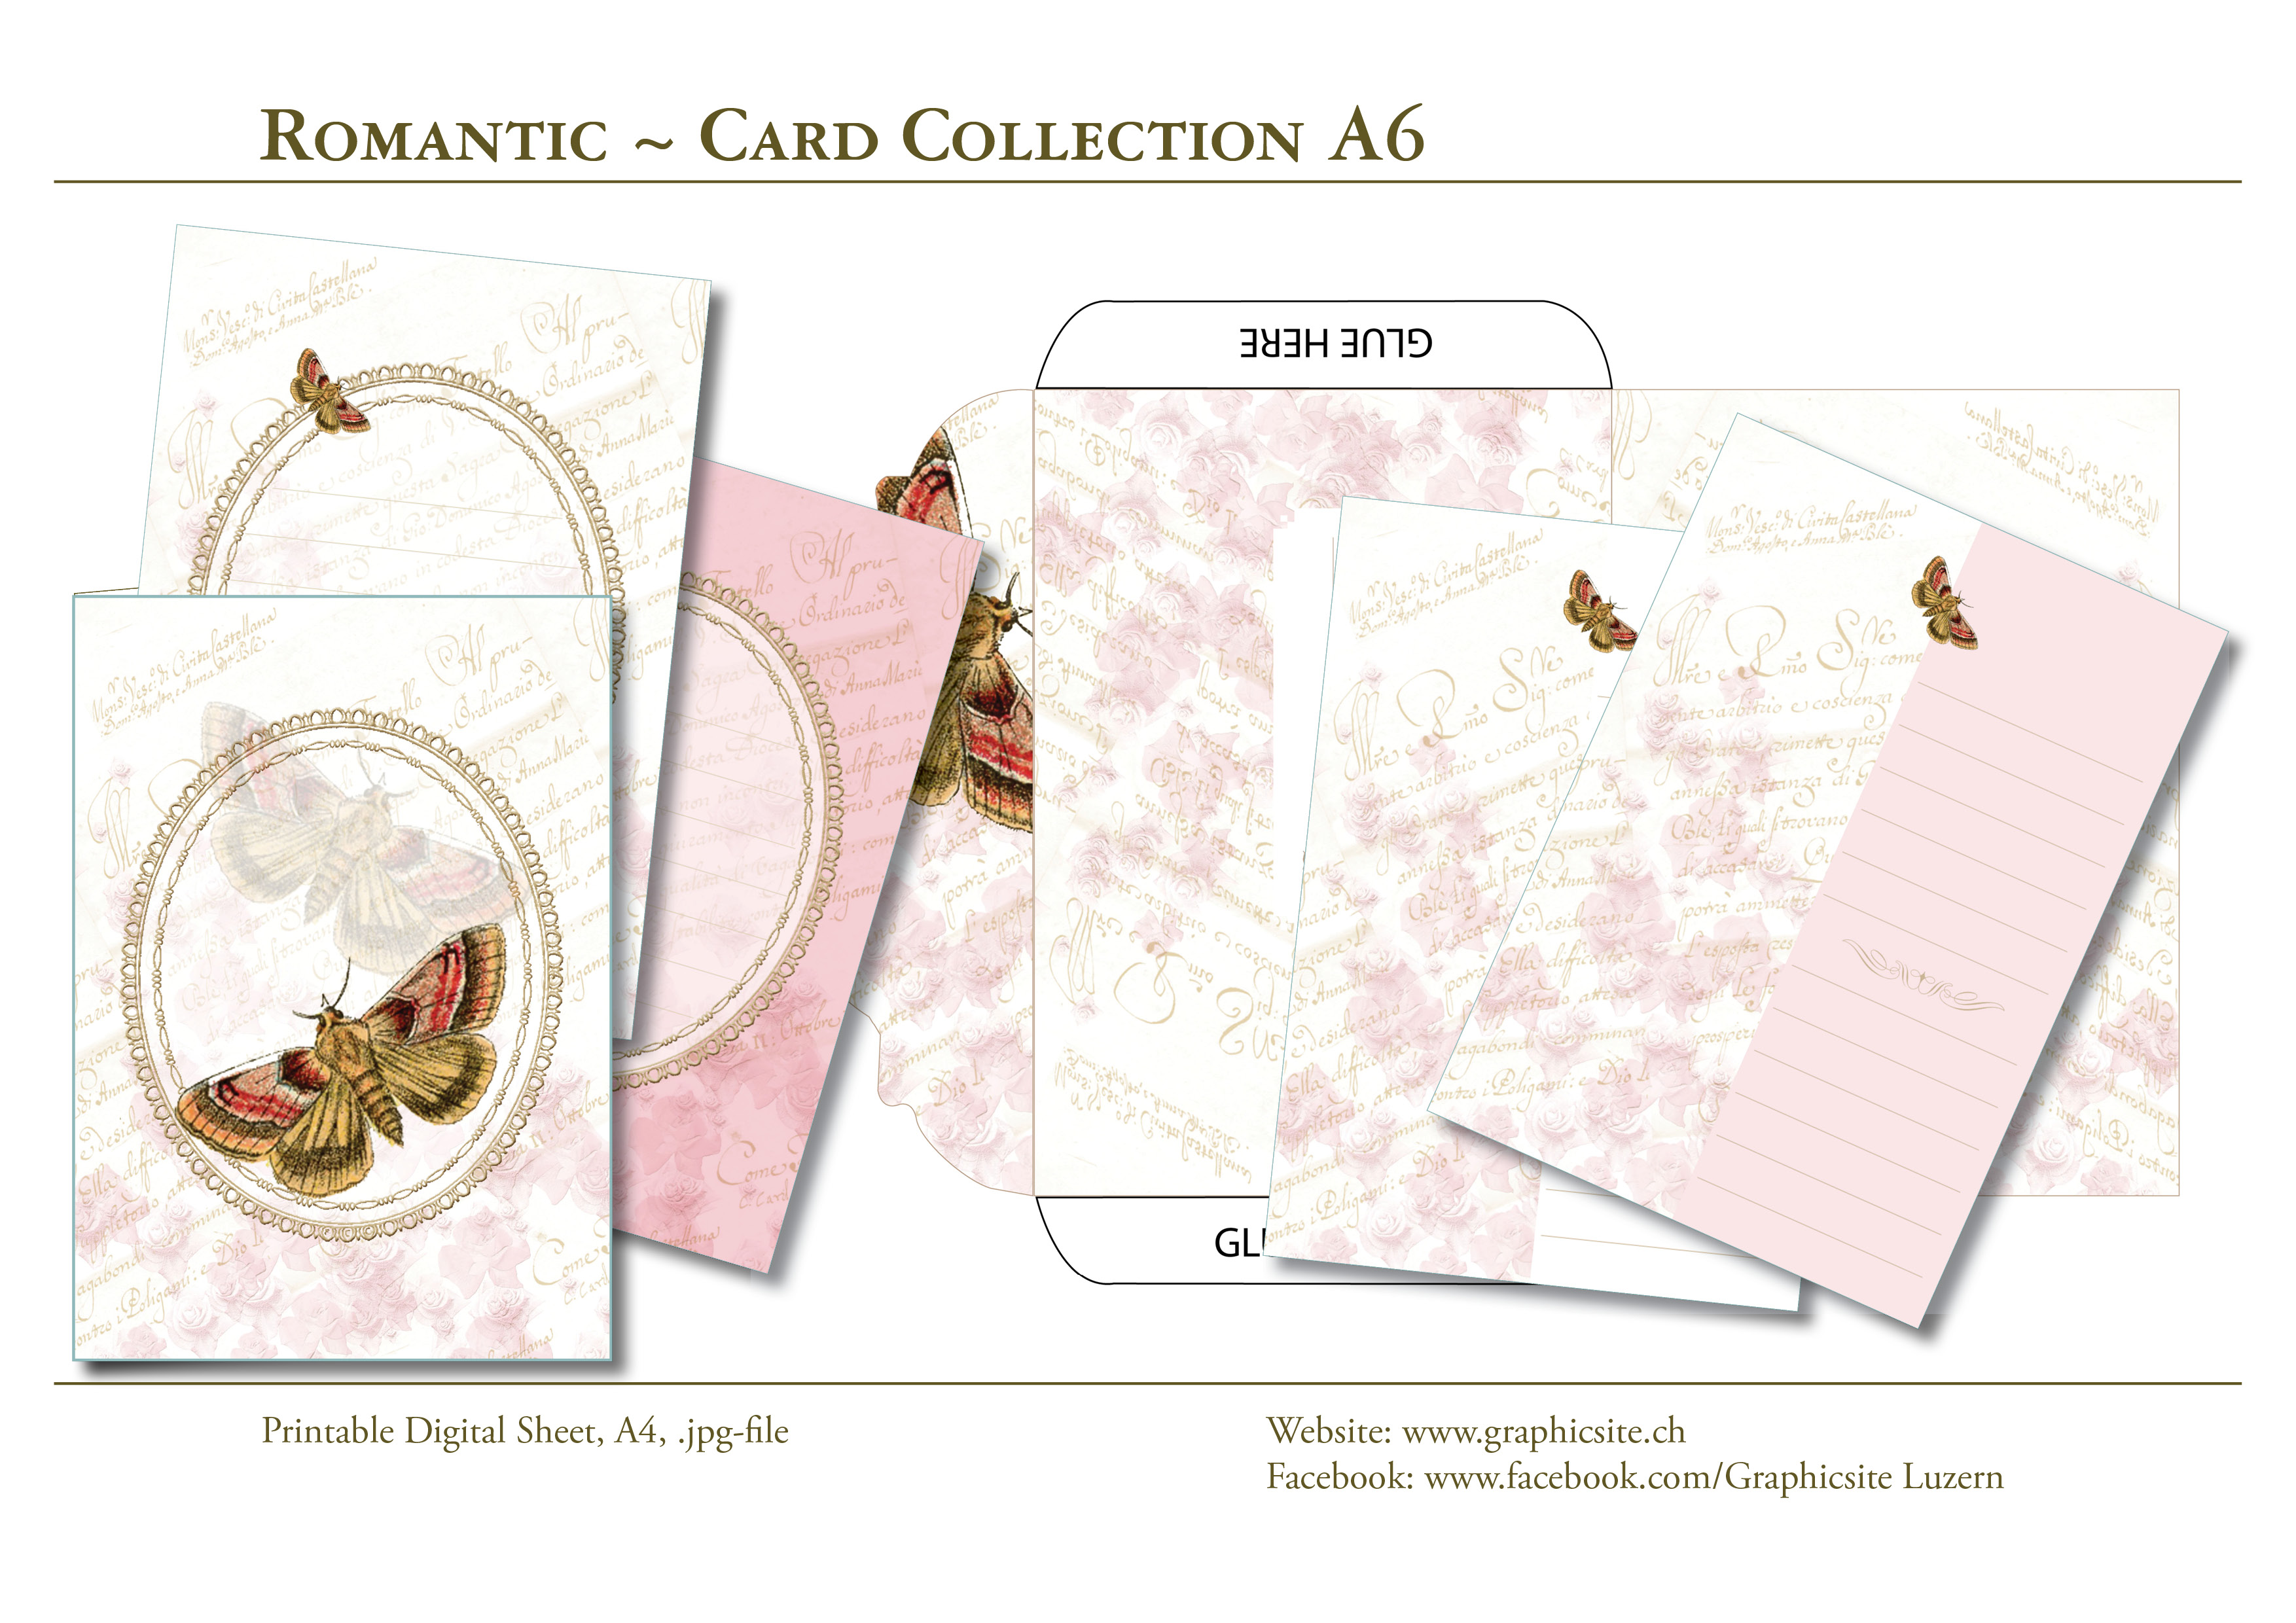 Printable Digital Sheets - Scrapbooking - Greeting Cards, Cards, Envelope, Flowers, Romantic Roses, Graphic Design, Luzern, Schweiz,